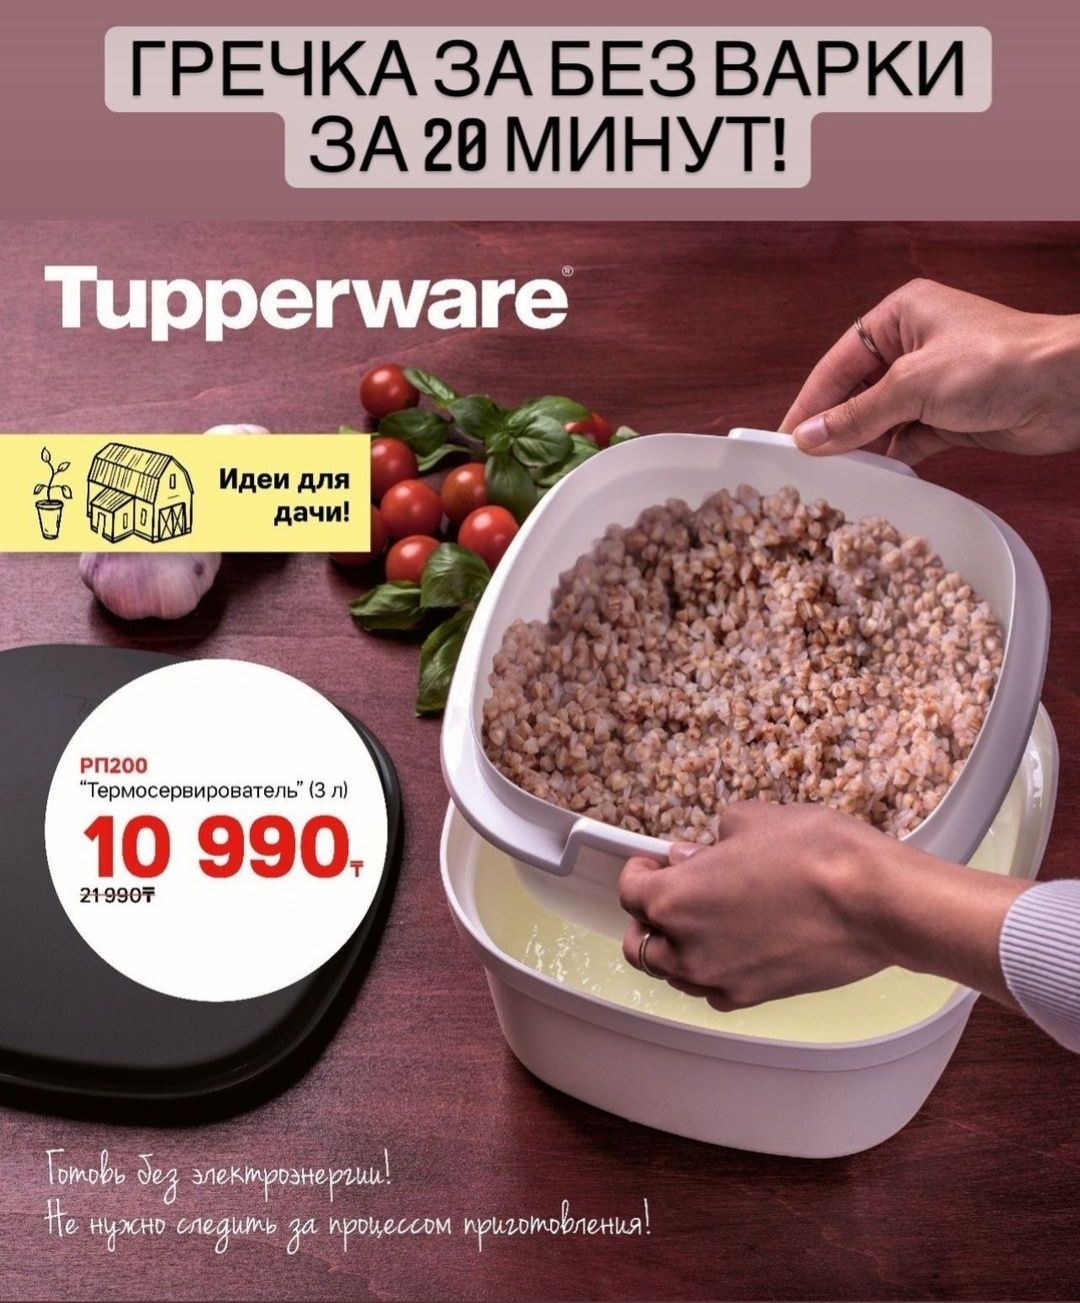 Tupperware компаниясының экологиялық таза посудалары